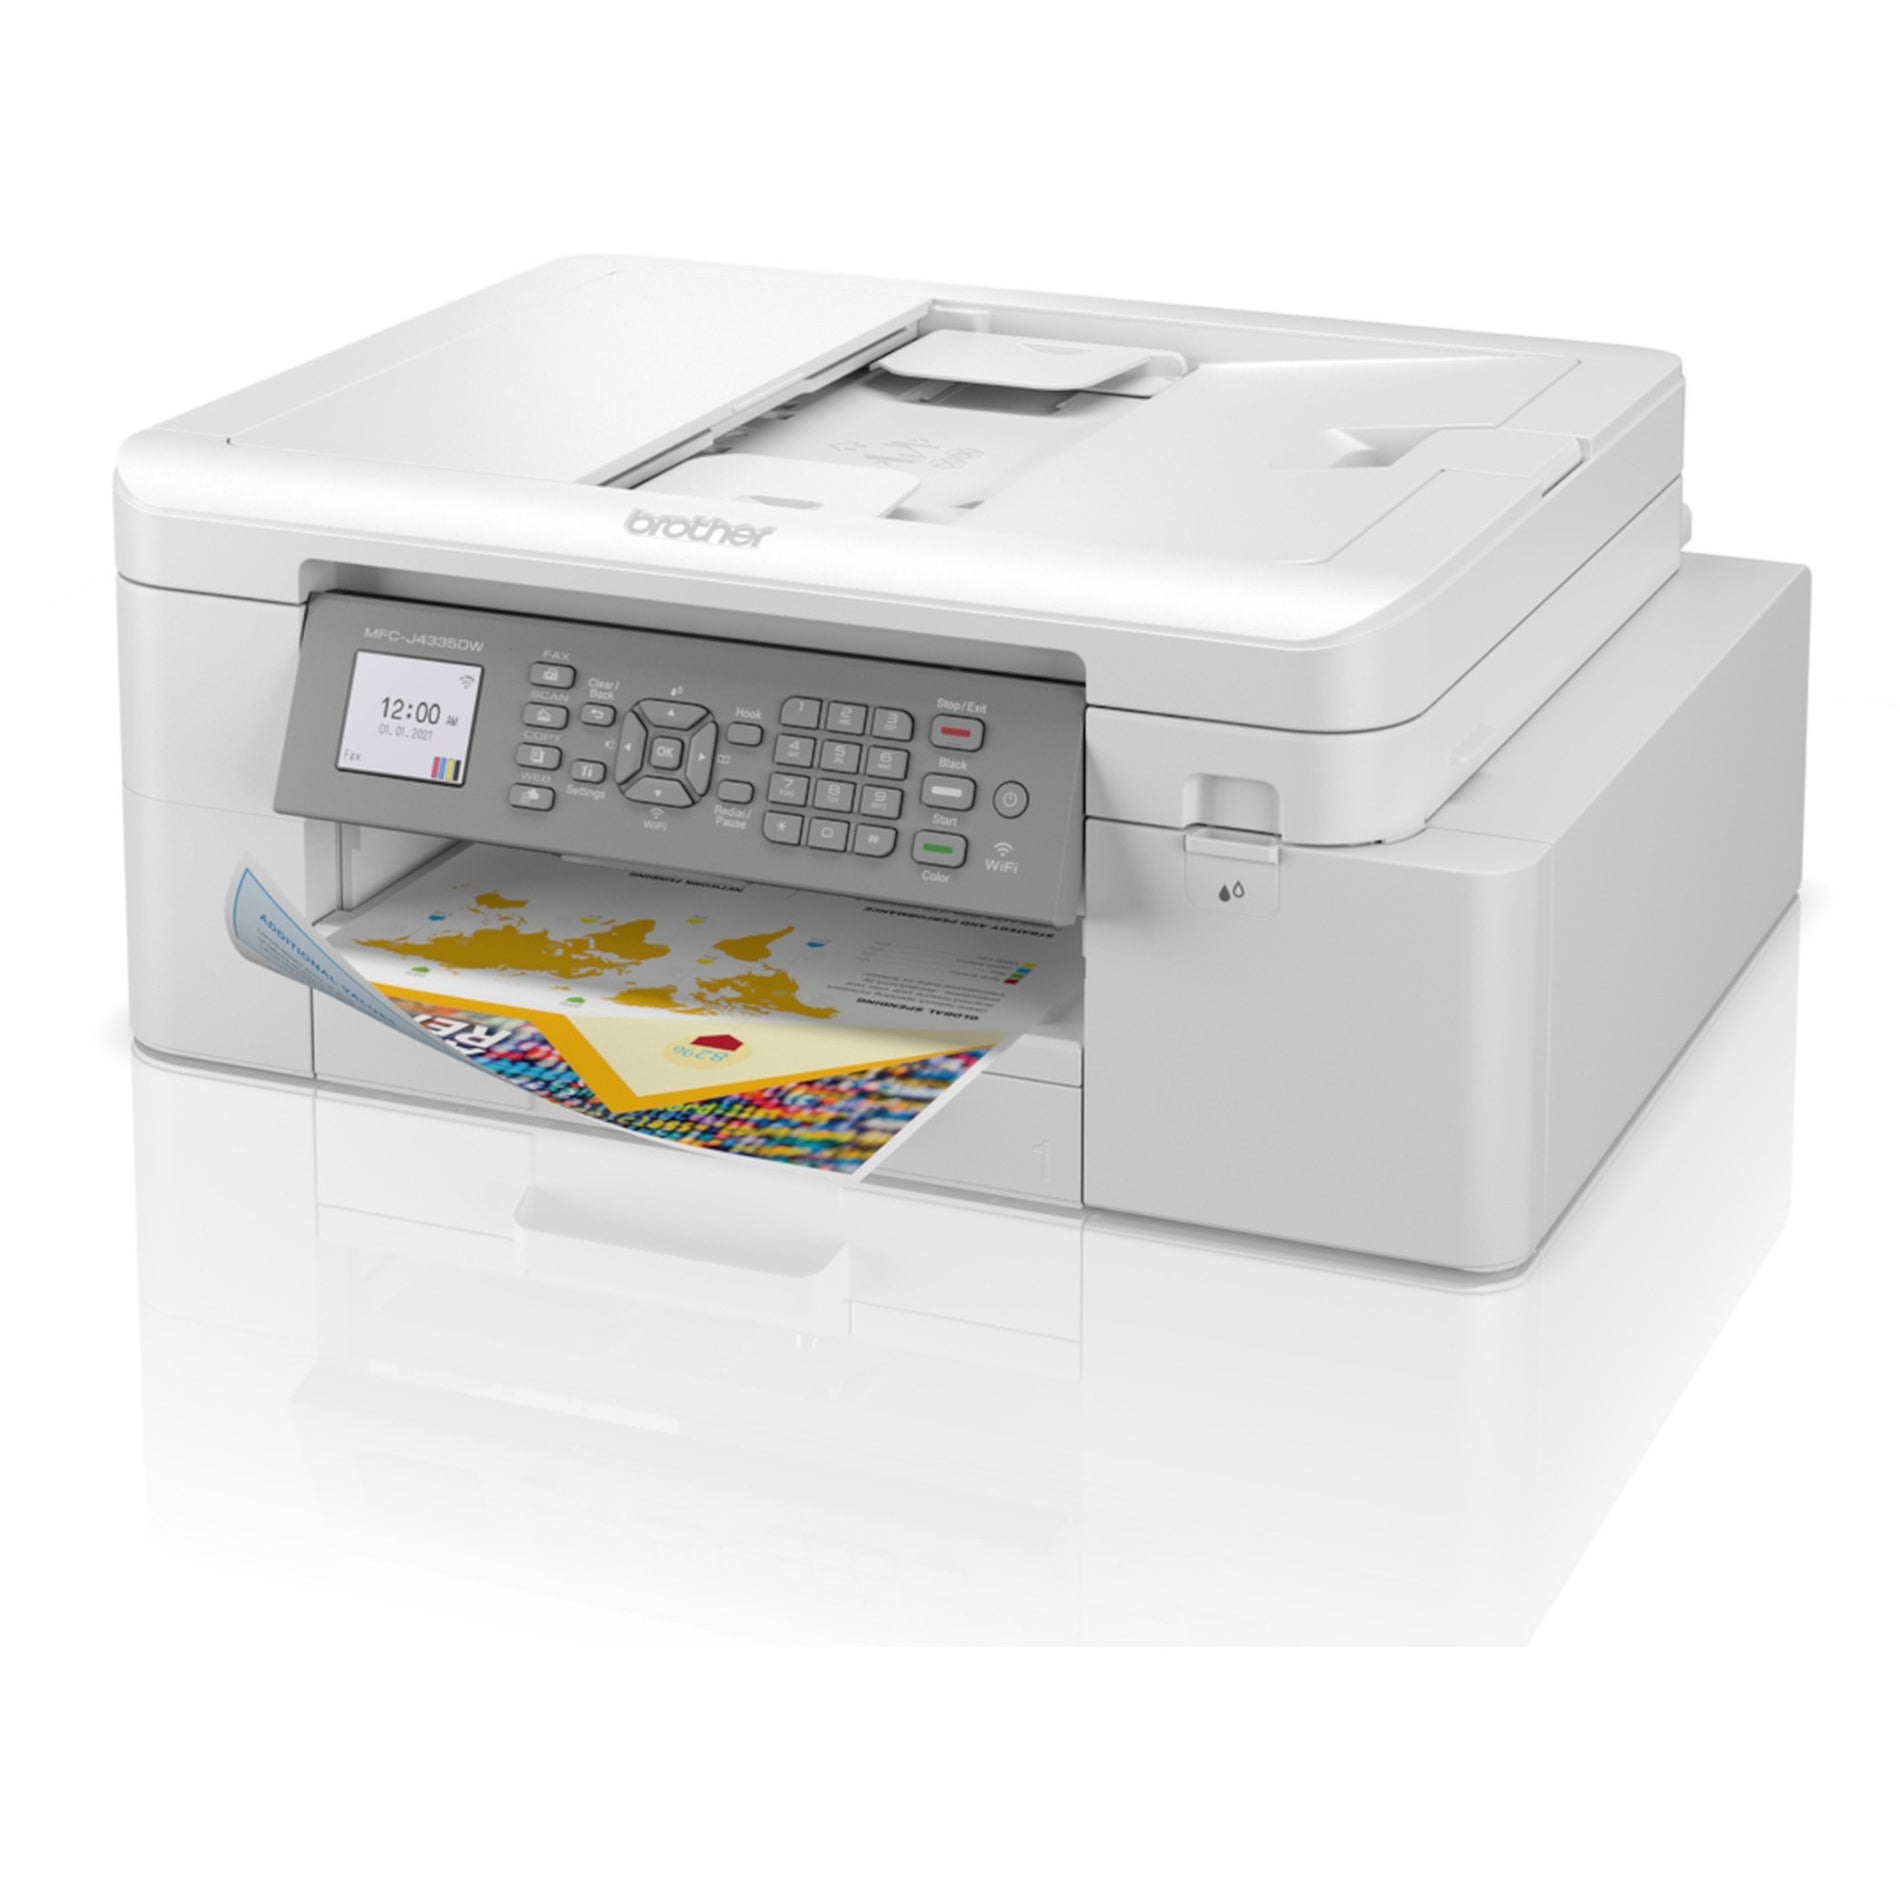 Brother MFCJ4335DW INKvestment Tank Printer, Wireless Inkjet Multifunction Printer, Color, Automatic Duplex Printing, 20 ppm Mono Print Speed, 19 ppm Color Print Speed, 4800 x 1200 Maximum Print Resolution